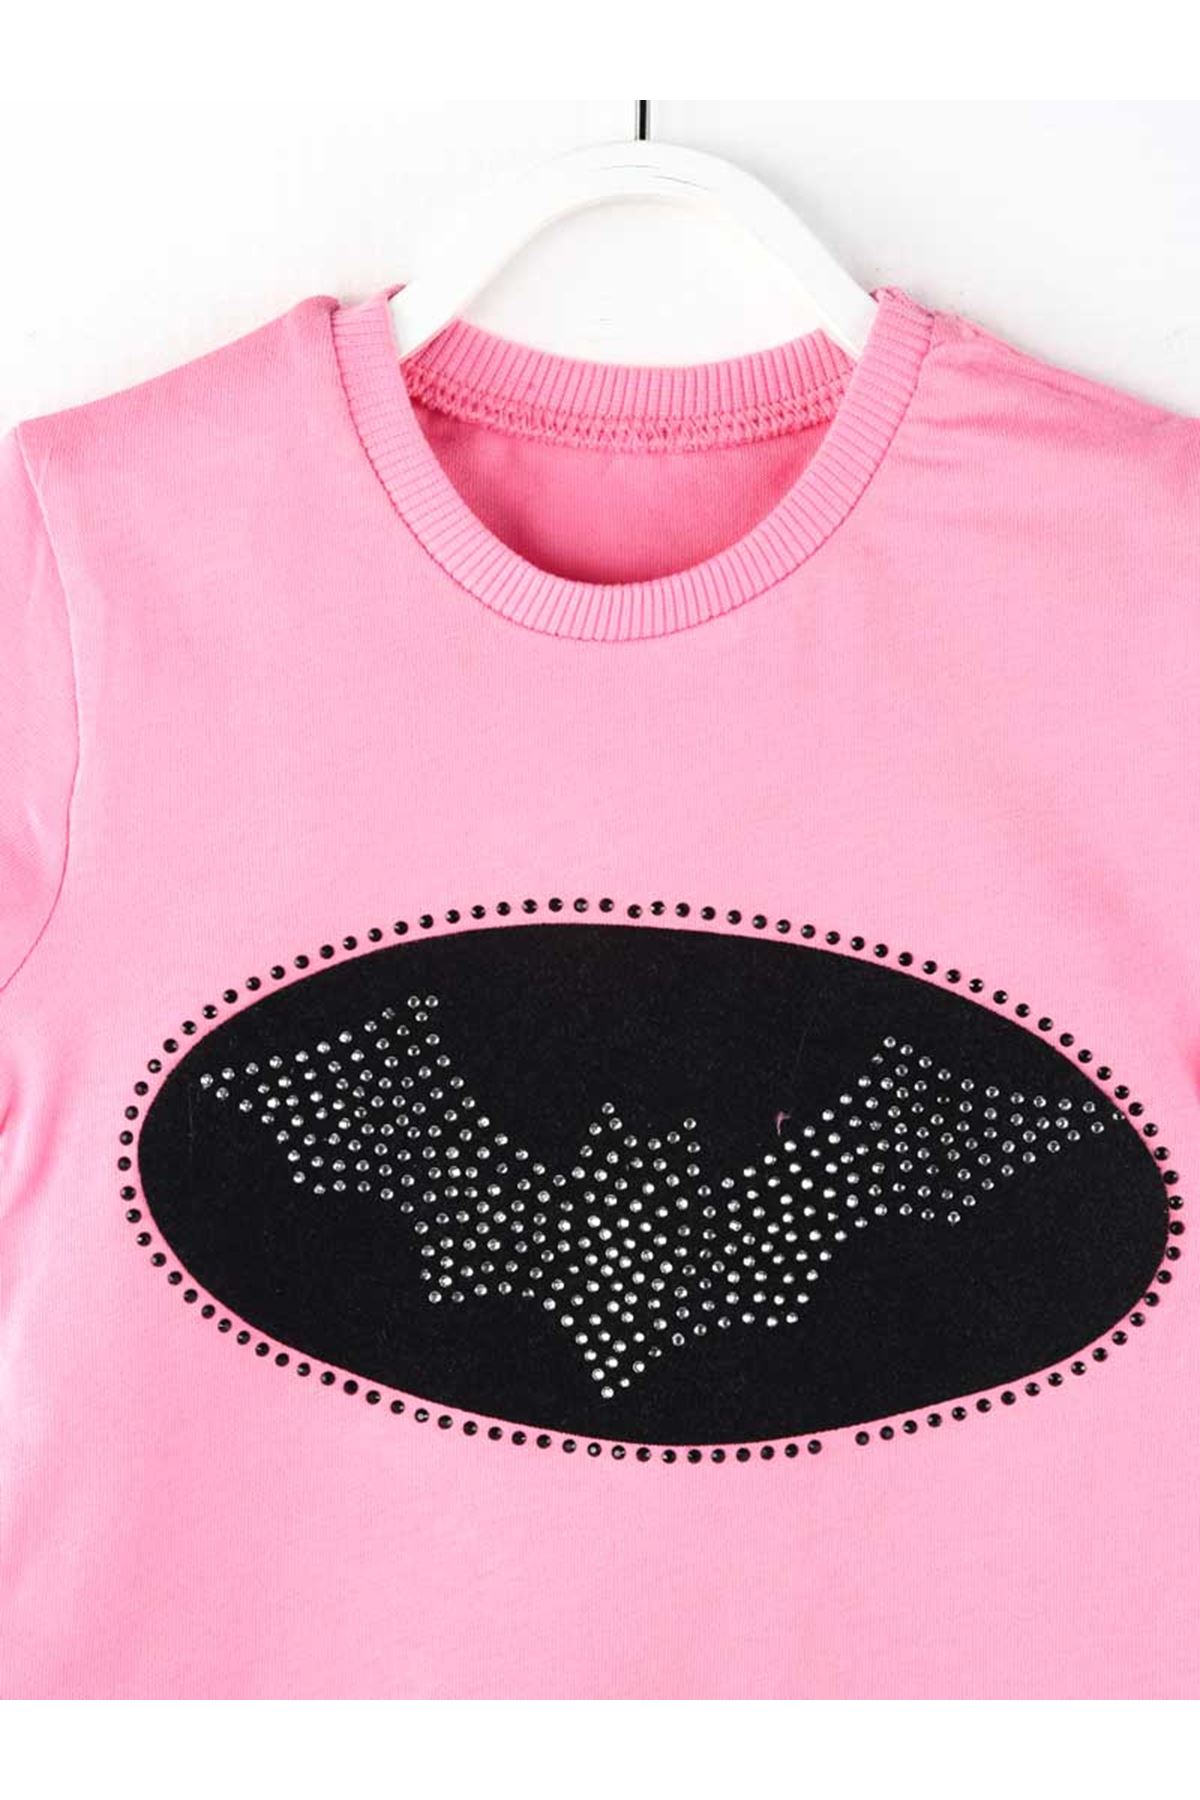 Girls skirt T-shirt 2 Sets Casual Model Stylish Girls Kids Cotton Clothing Sets pink Black suit cute clothing style